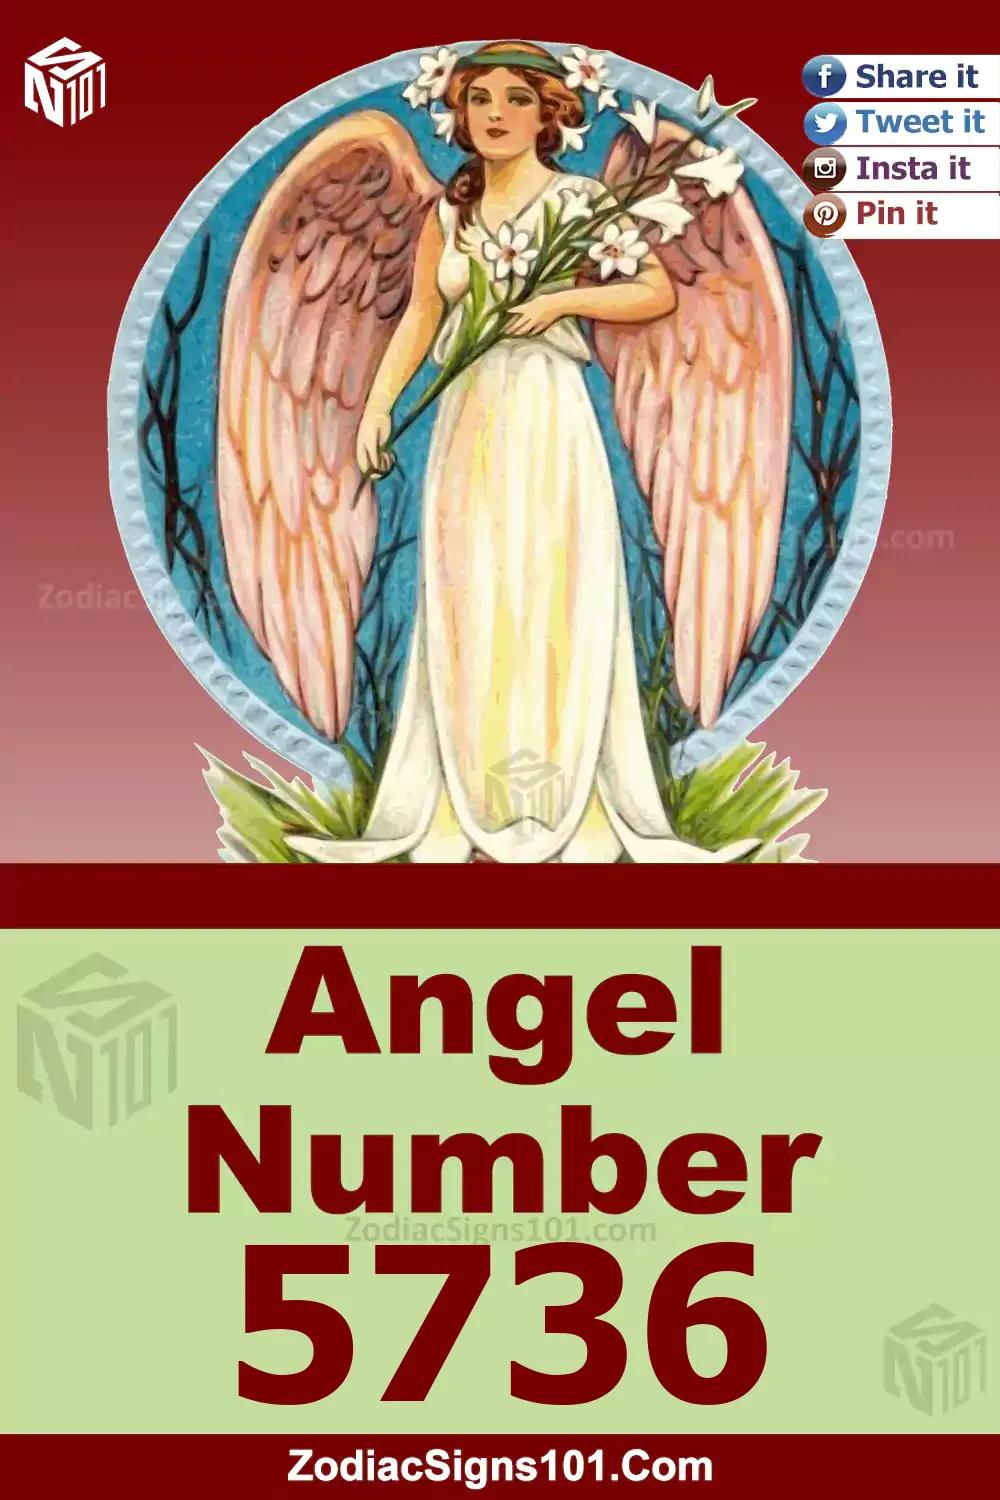 5736-Angel-Number-Meaning.jpg